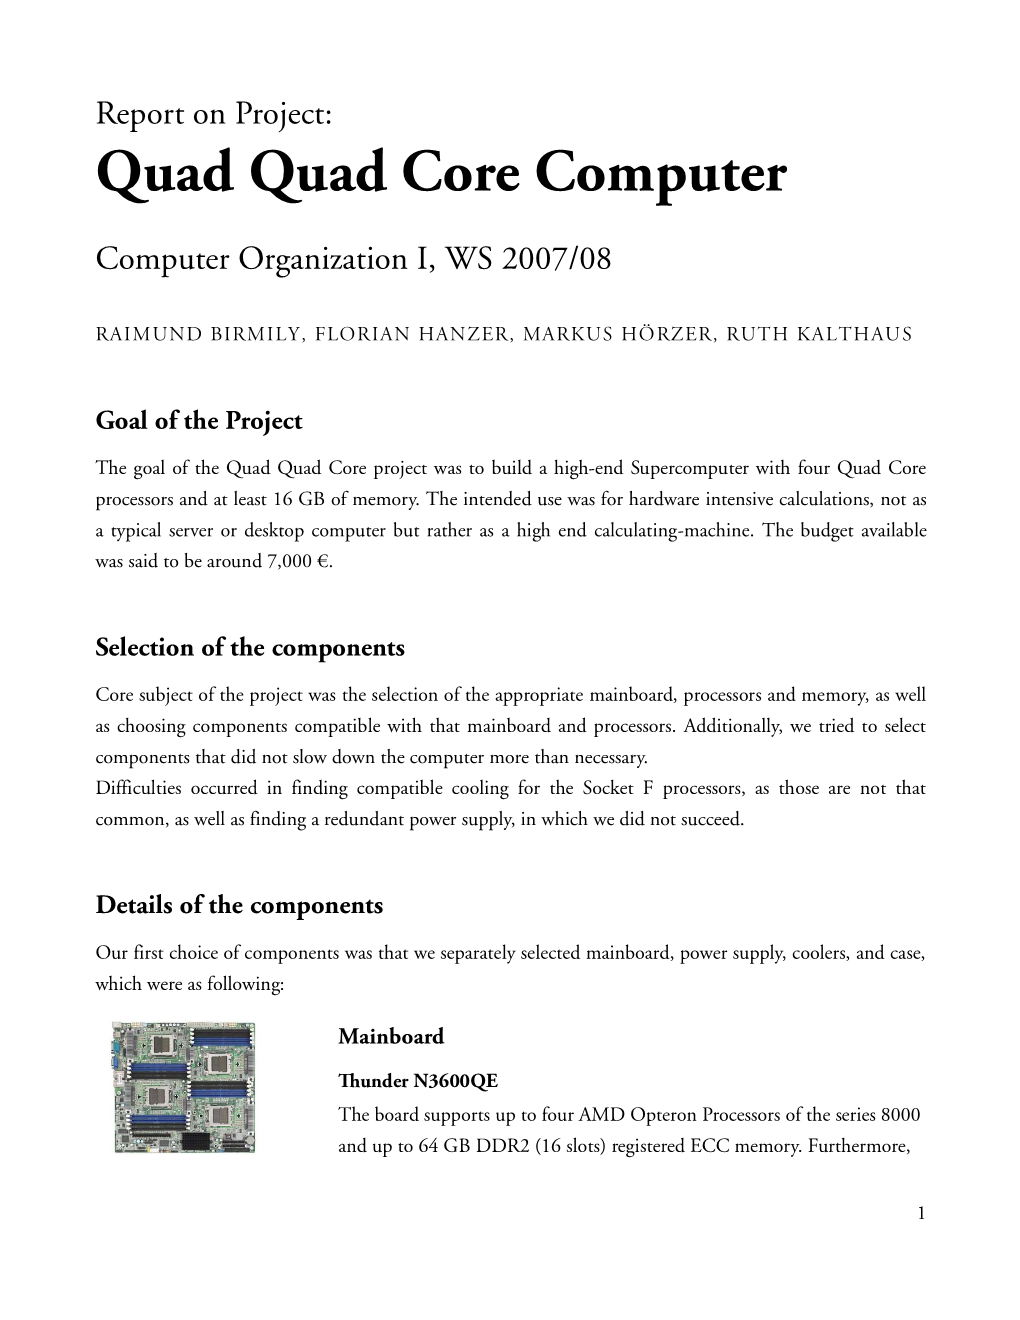 Quad Quad Core Computer